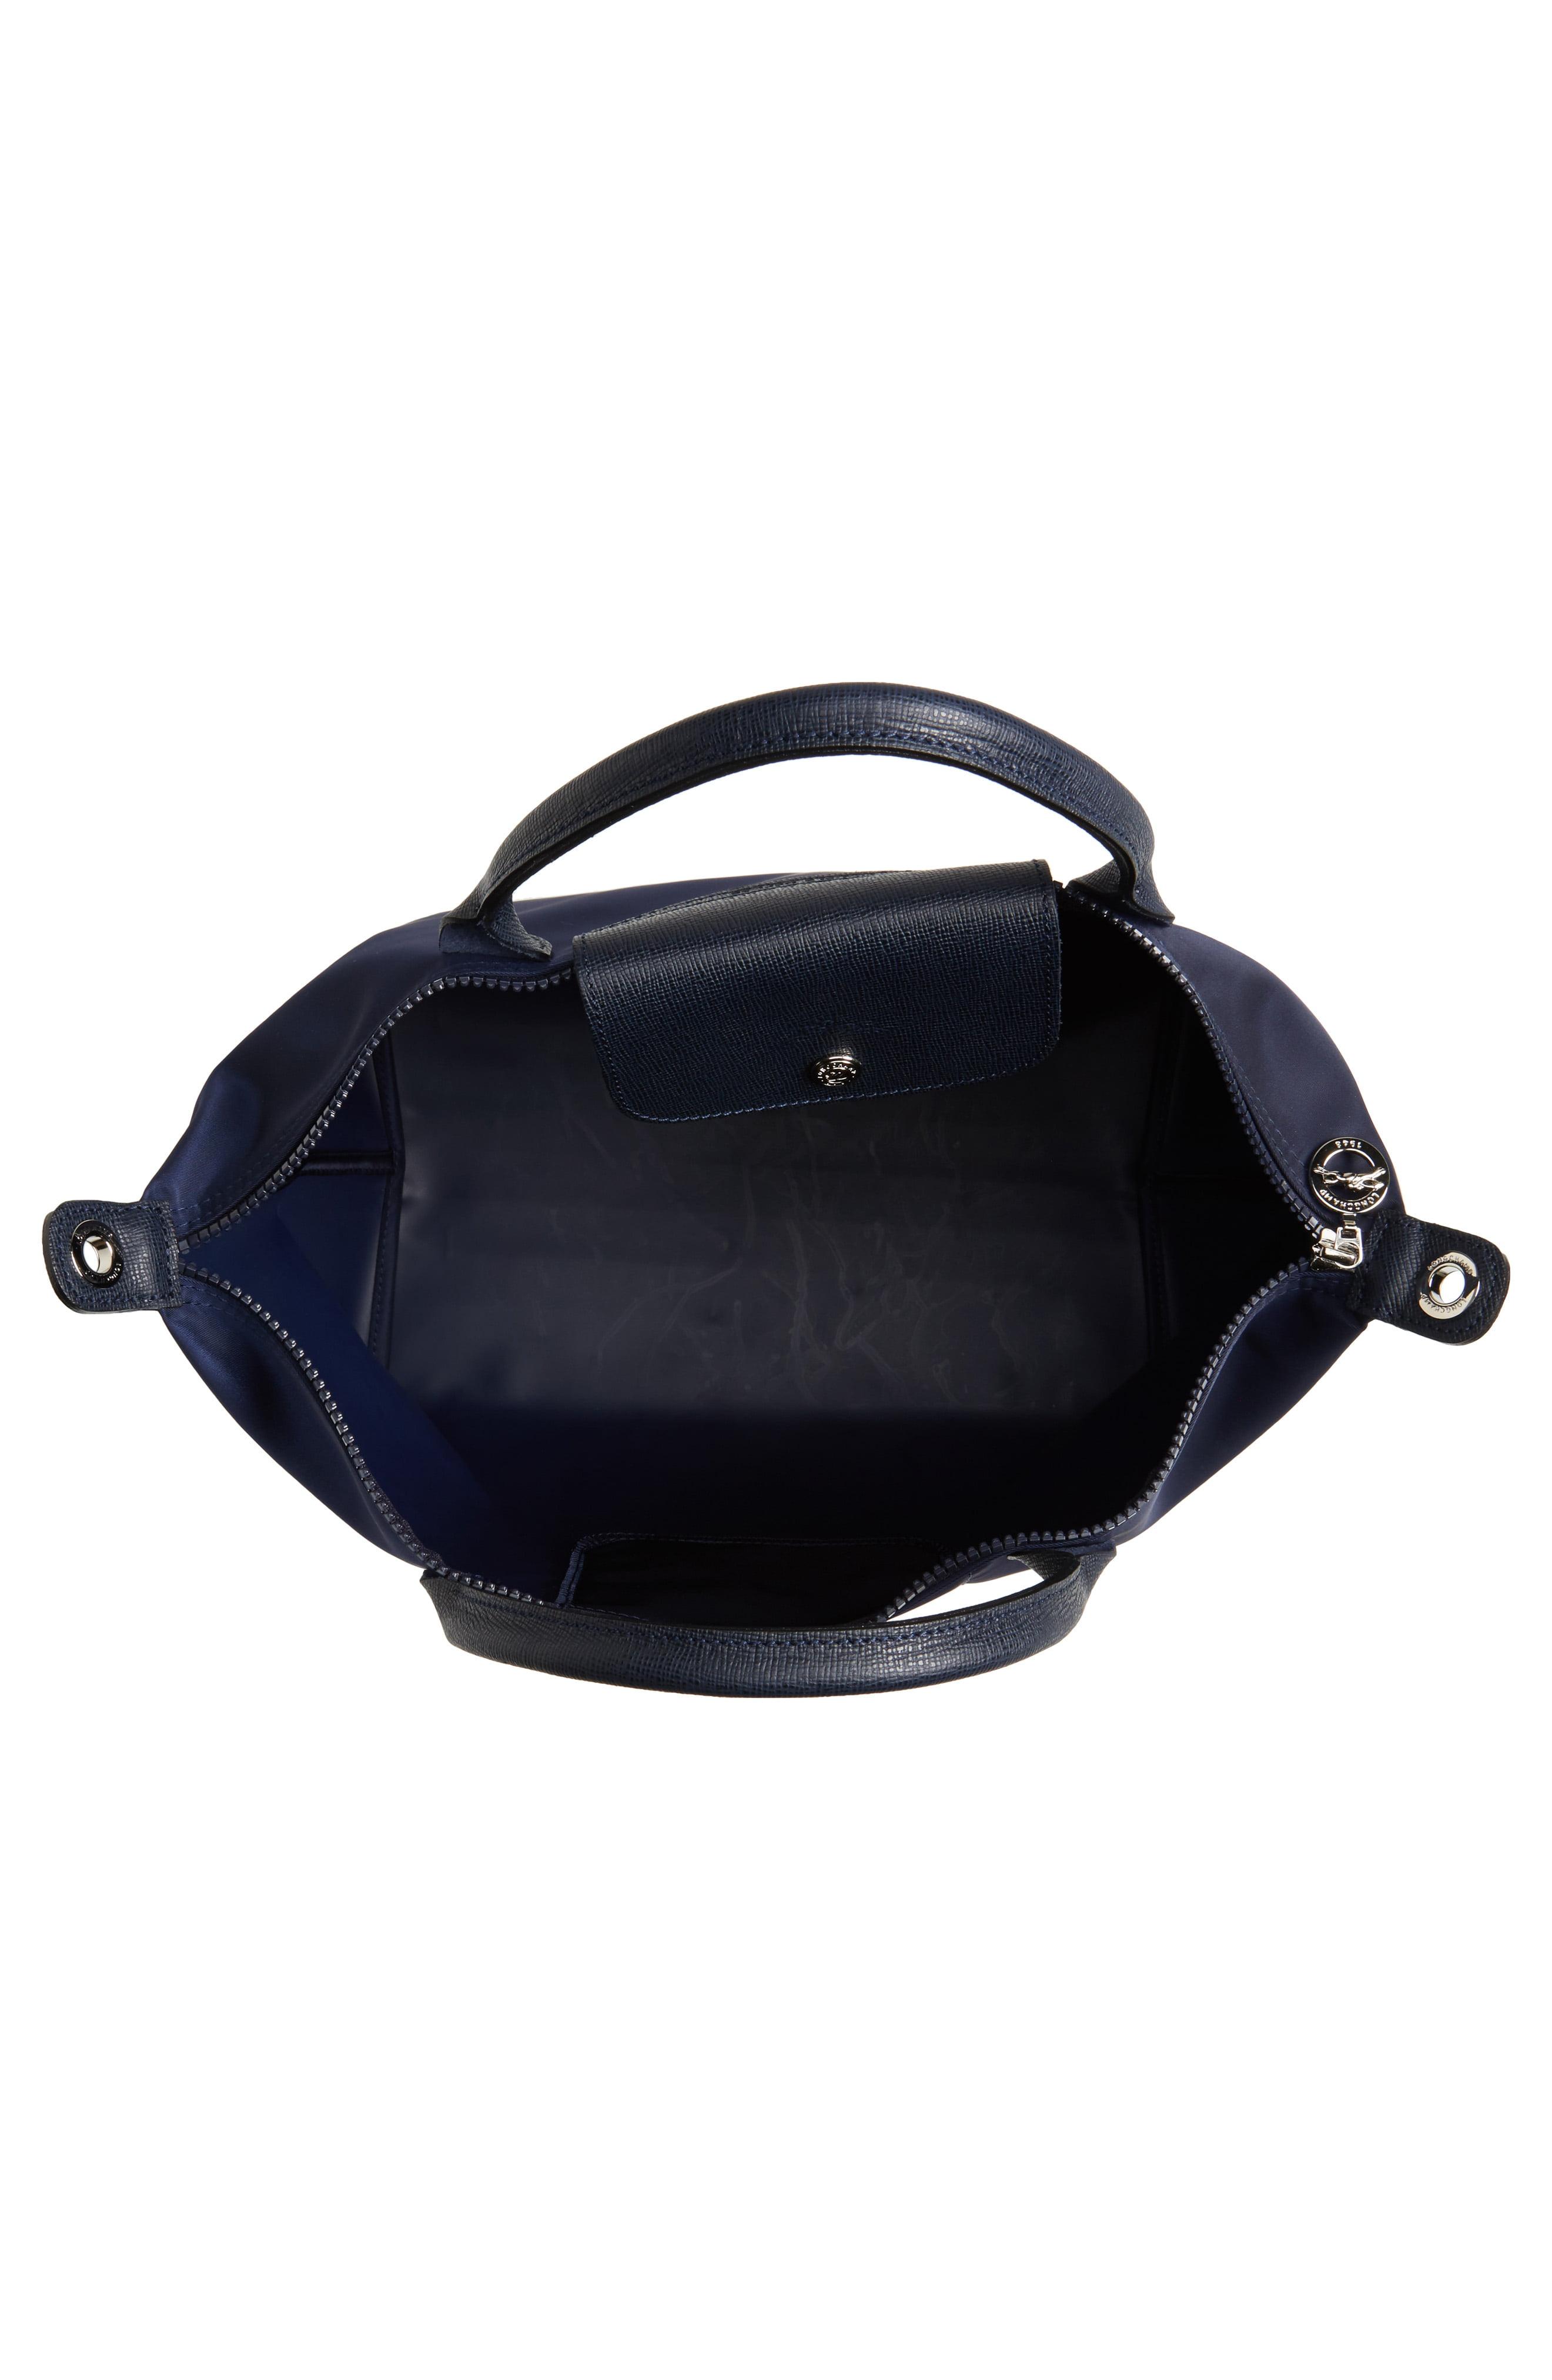 Longchamp Le Pliage Neo Small Nylon Tote Shoulder Bag ~NEW~ Navy